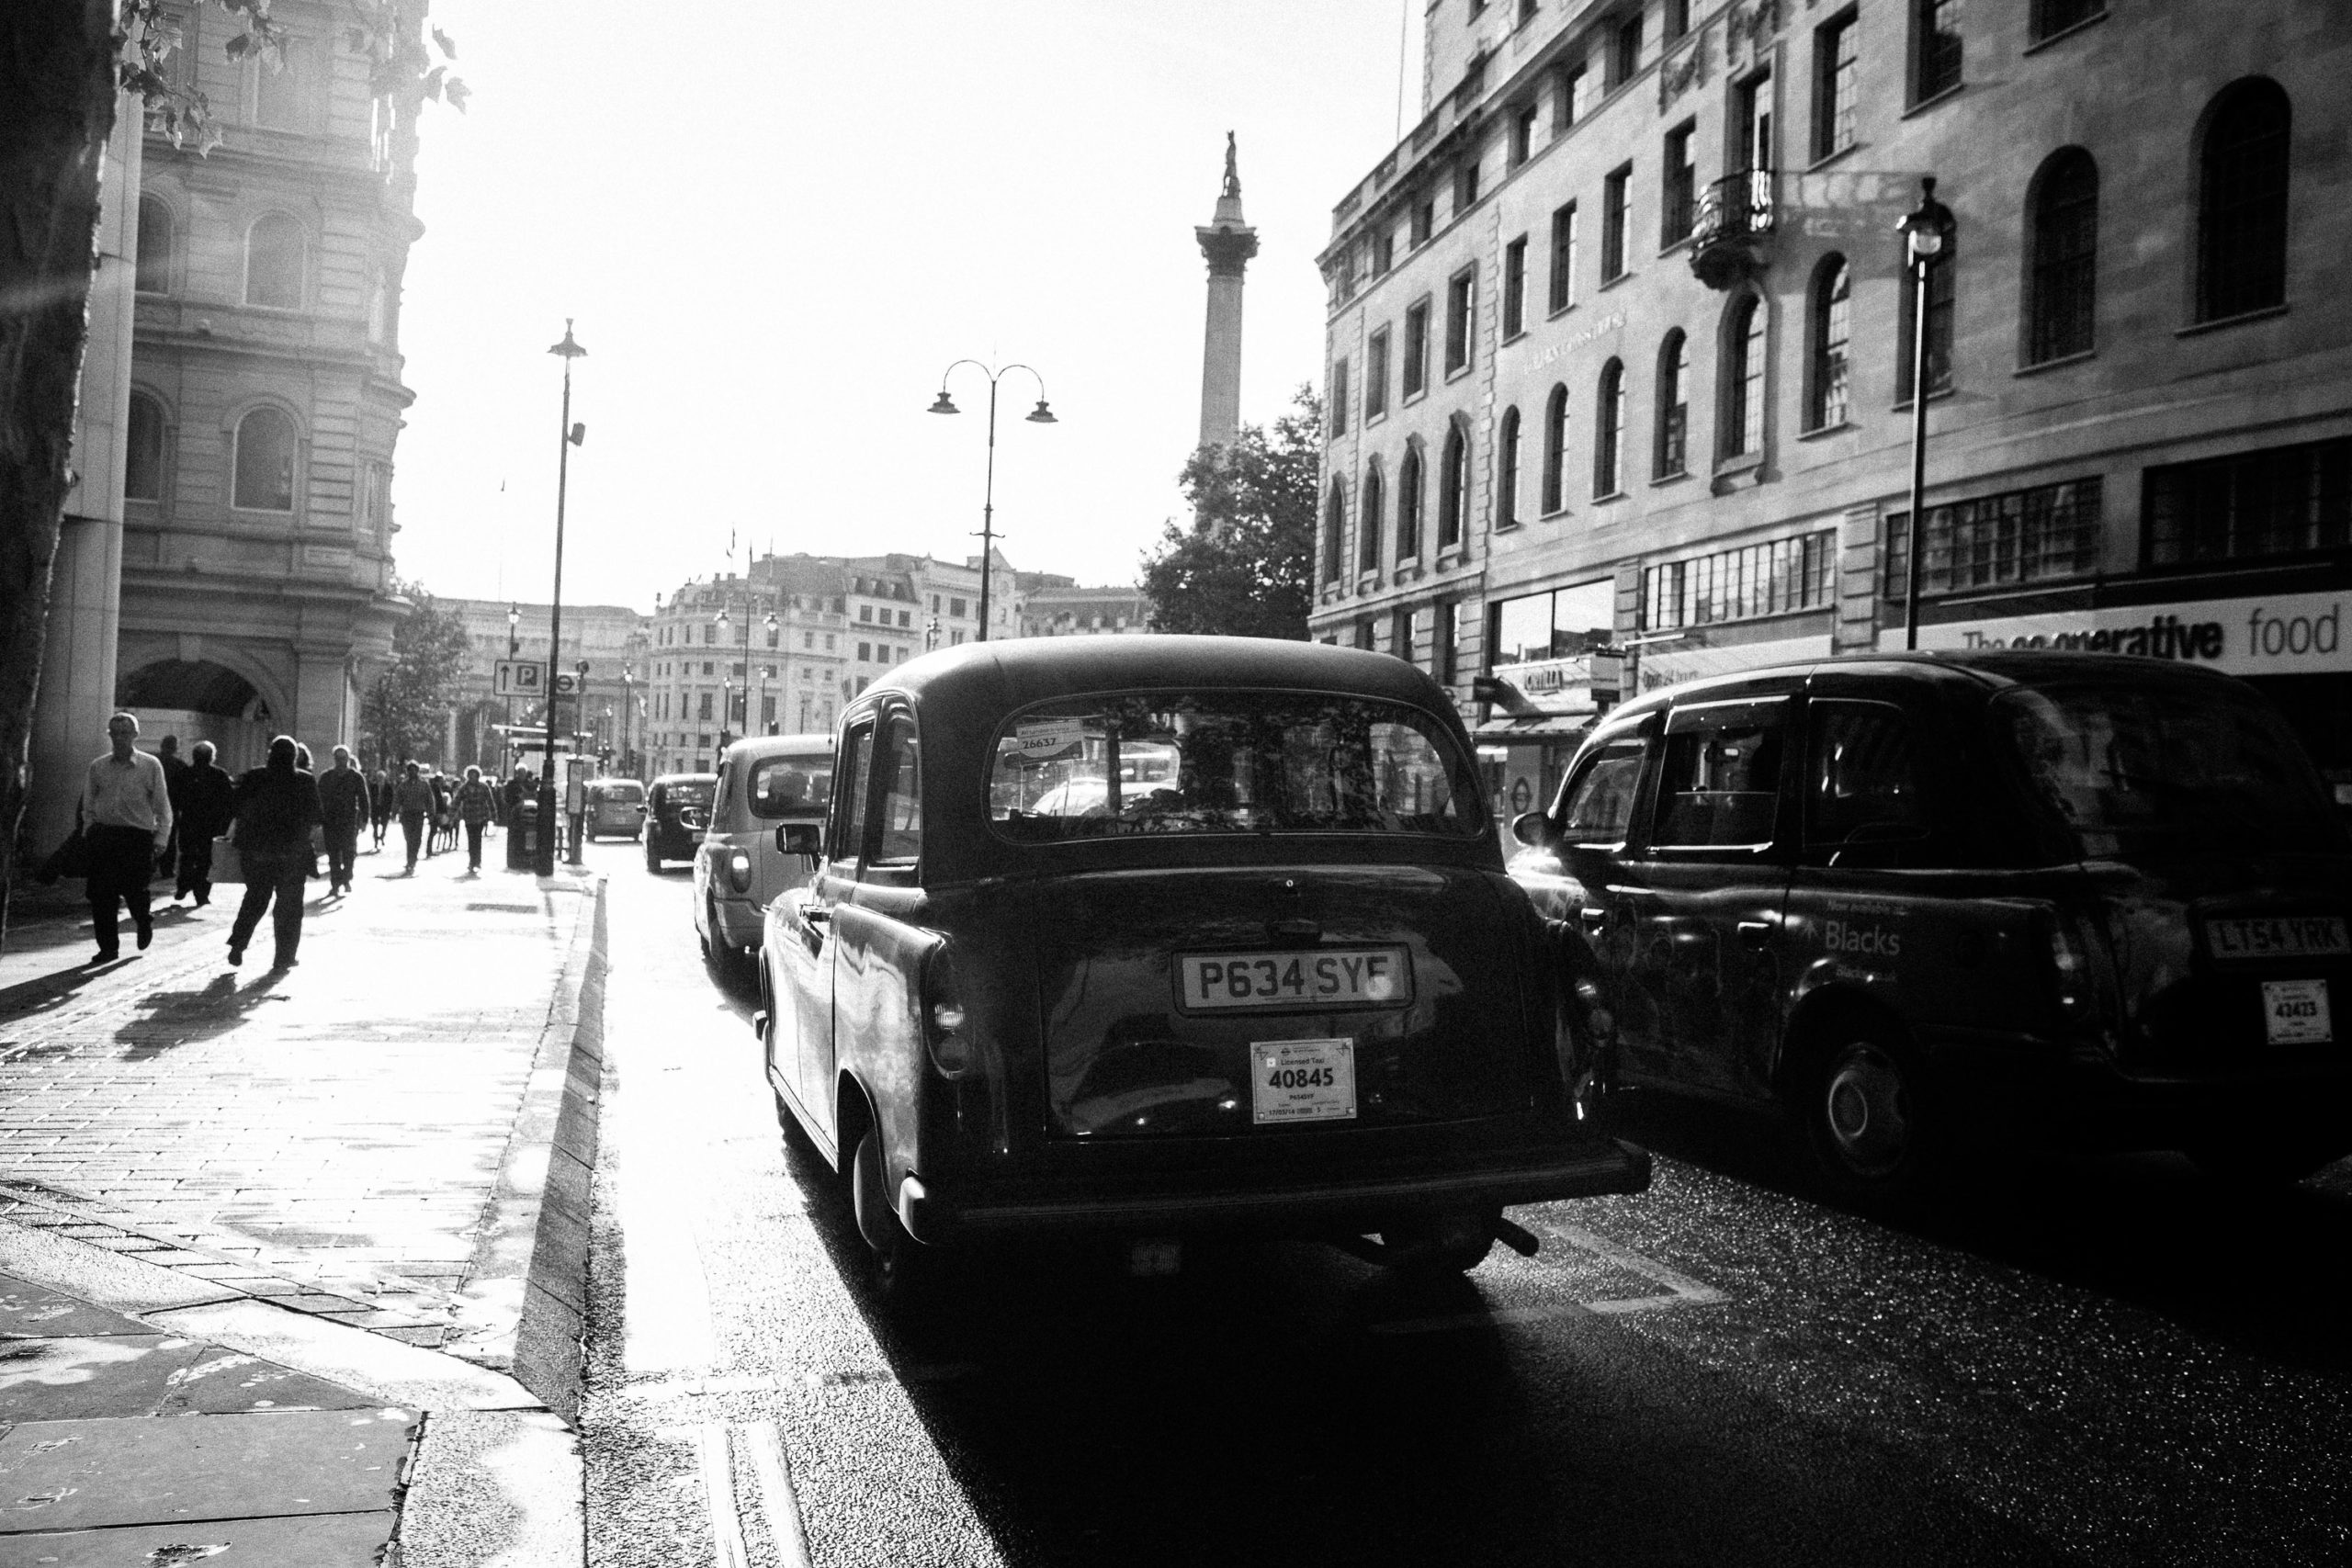 Taxi at Strand Street heading to Trafalgar Square